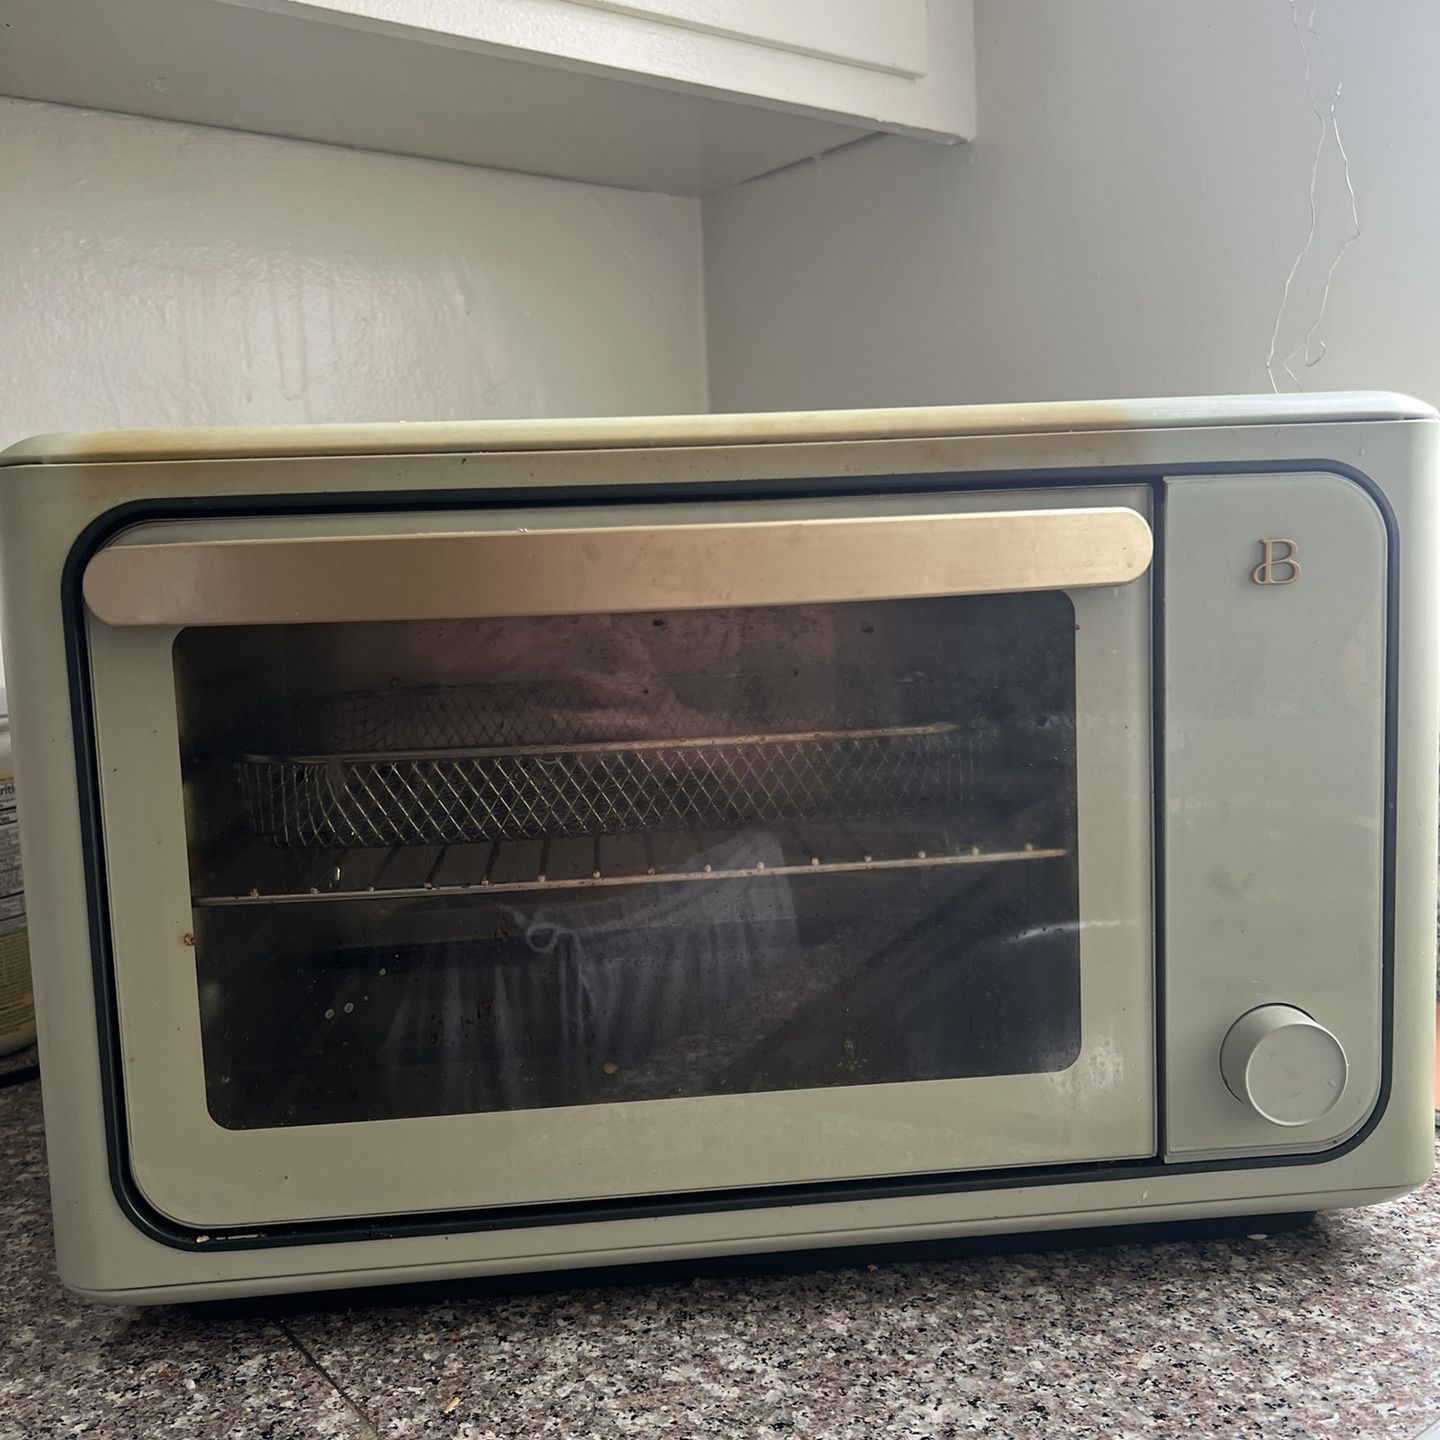 6 Slice Air Fryer Toaster Oven, by Drew Barrymore,Dishwasher Safe